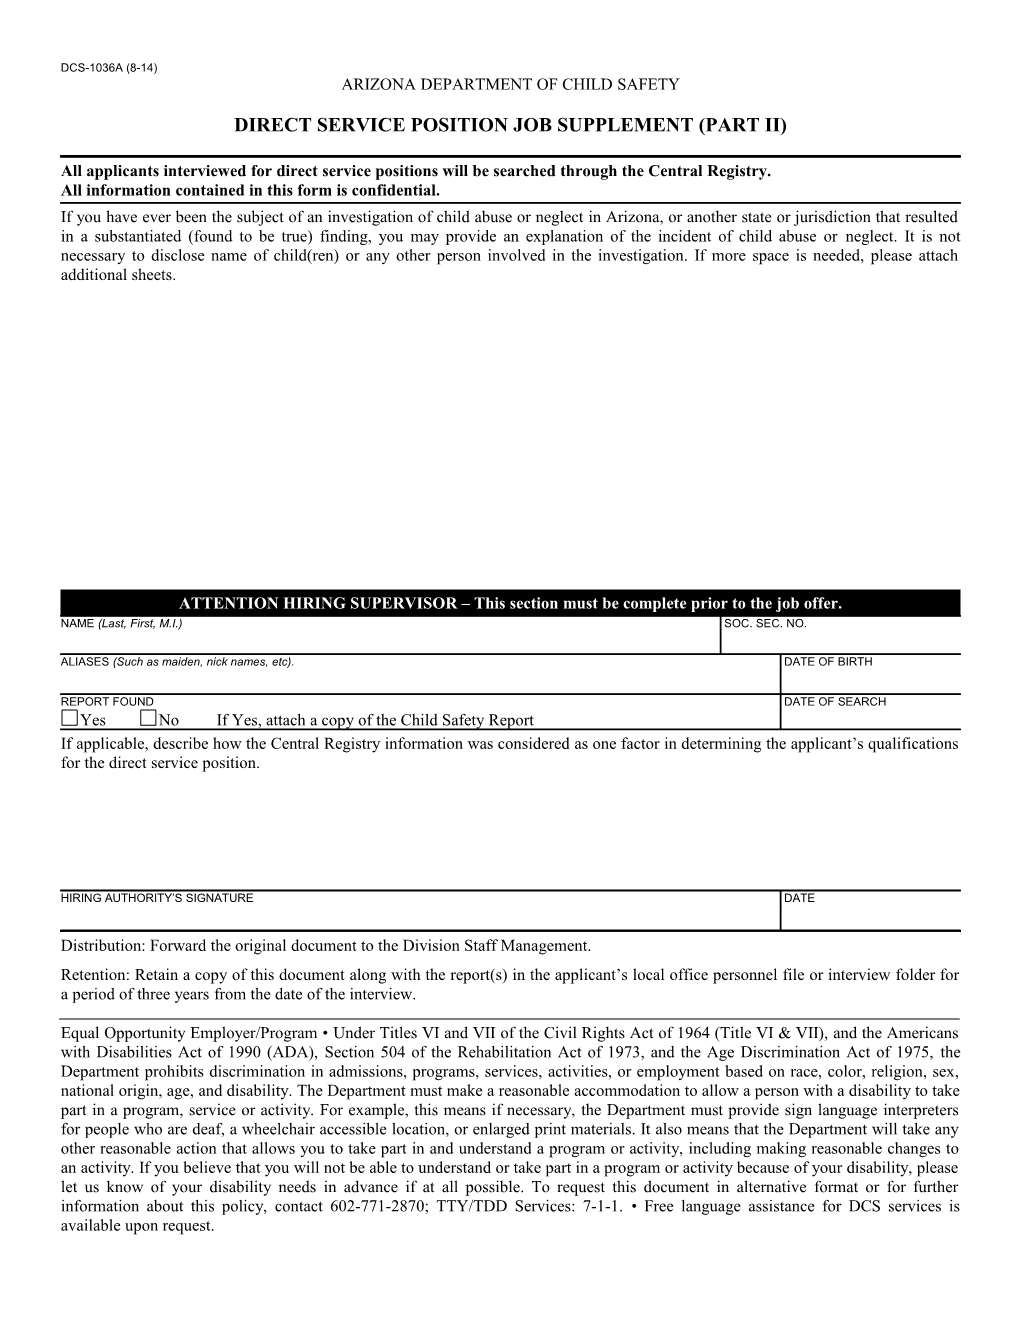 DCS-1036A - Direct Service Position Job Supplement (Part II)